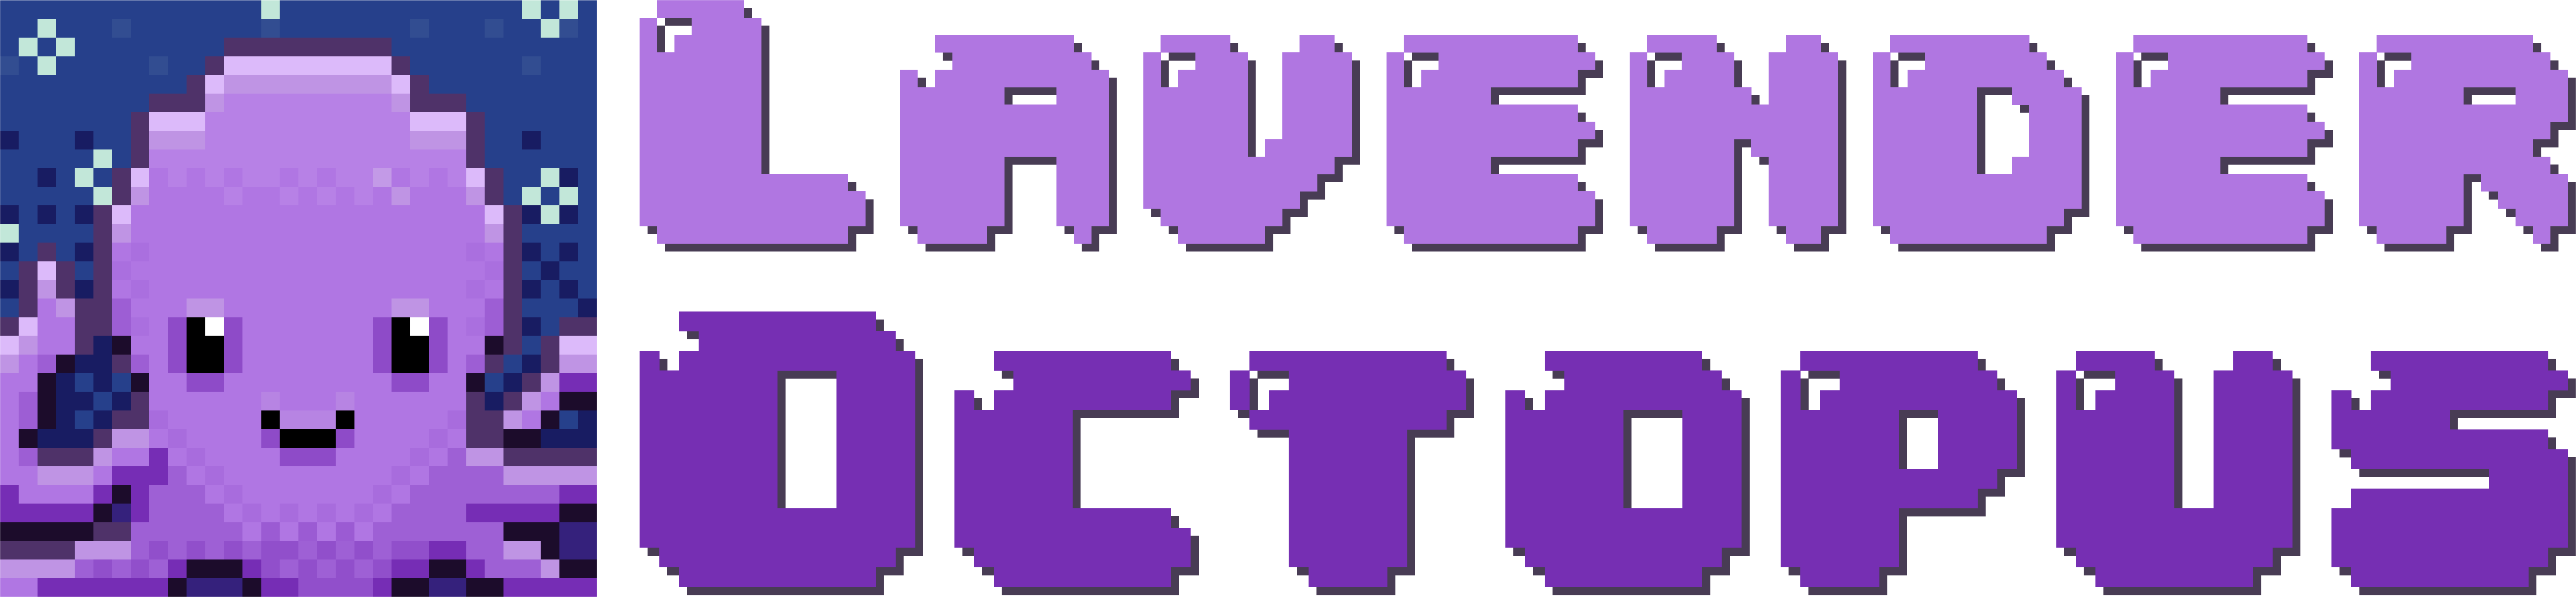 Lavender Octopus Logo